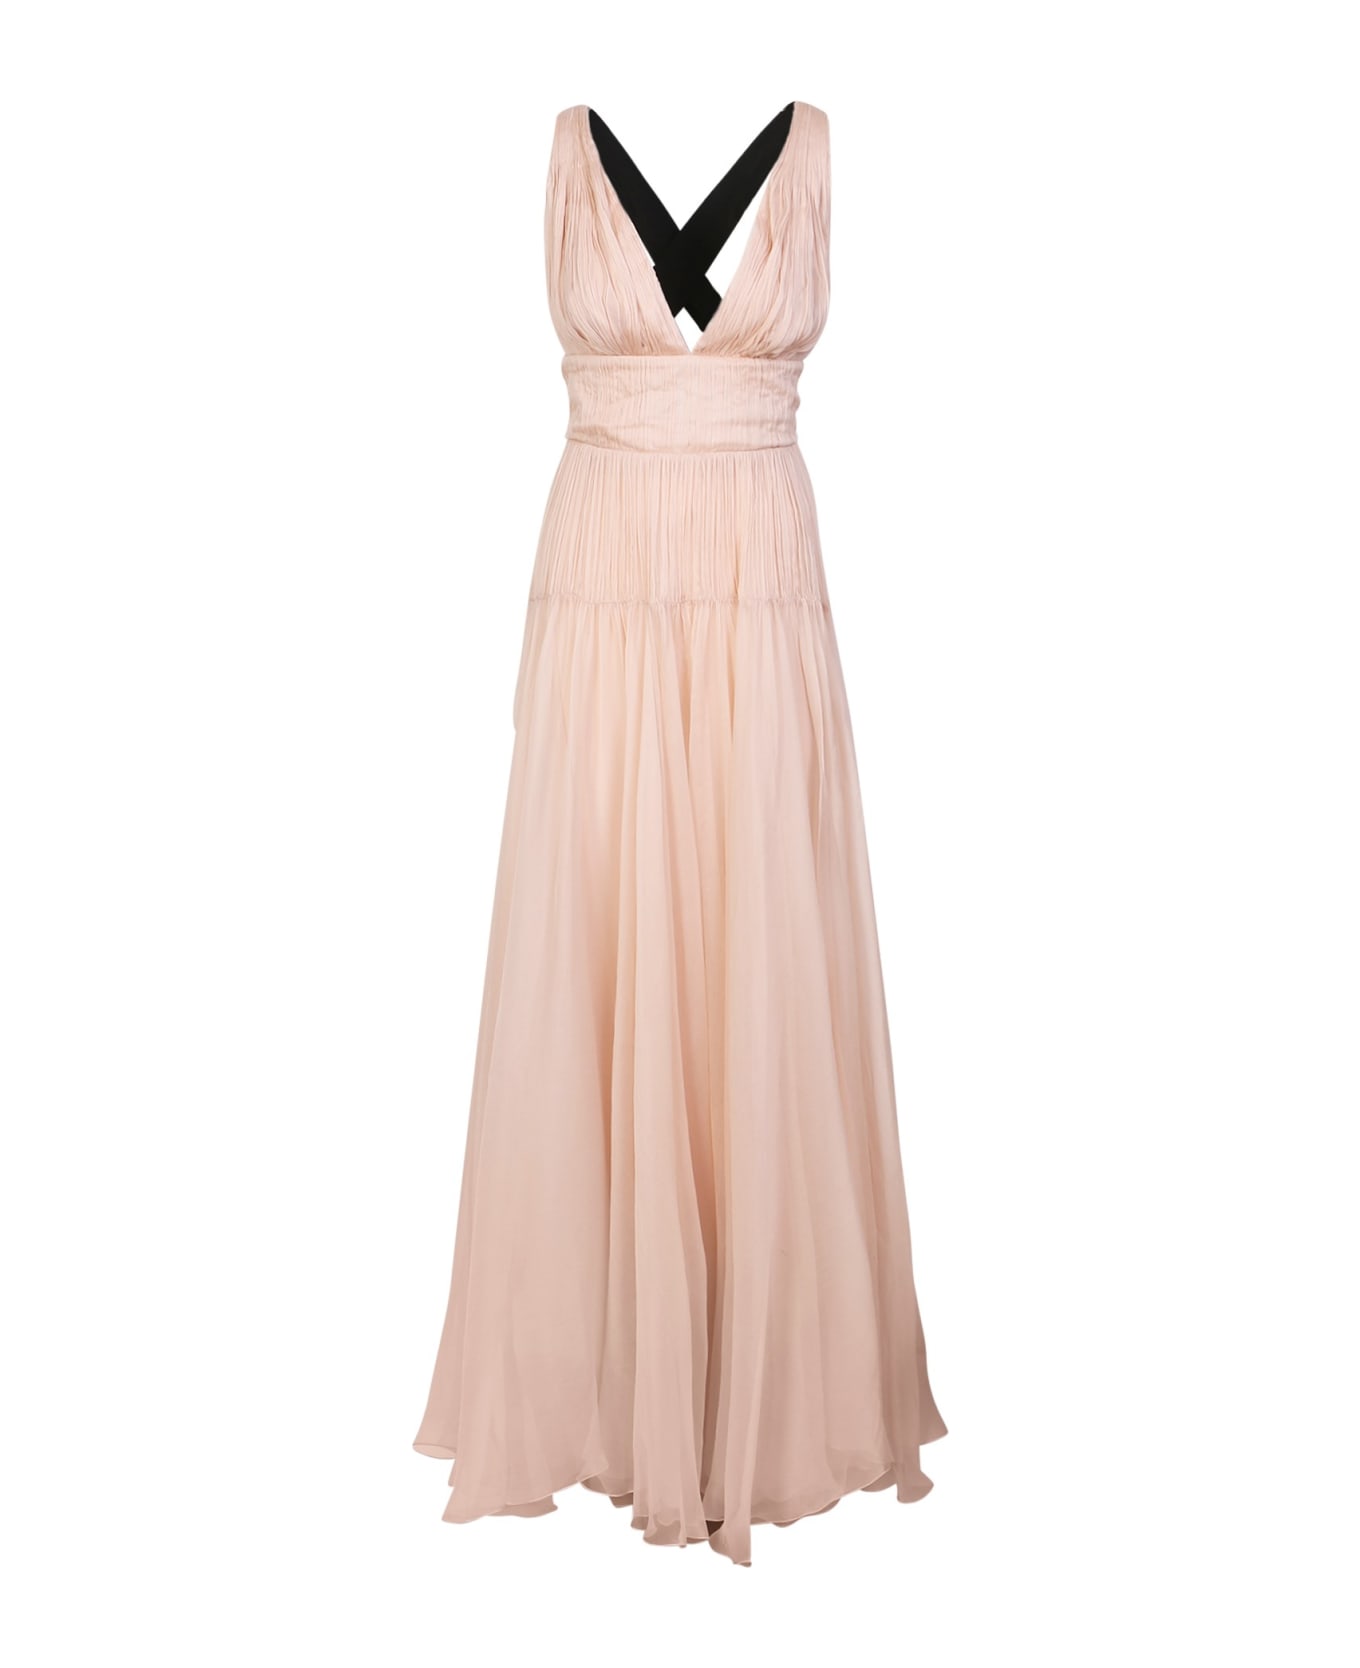 Maria Lucia Hohan Pink Calliope Dress - Pink